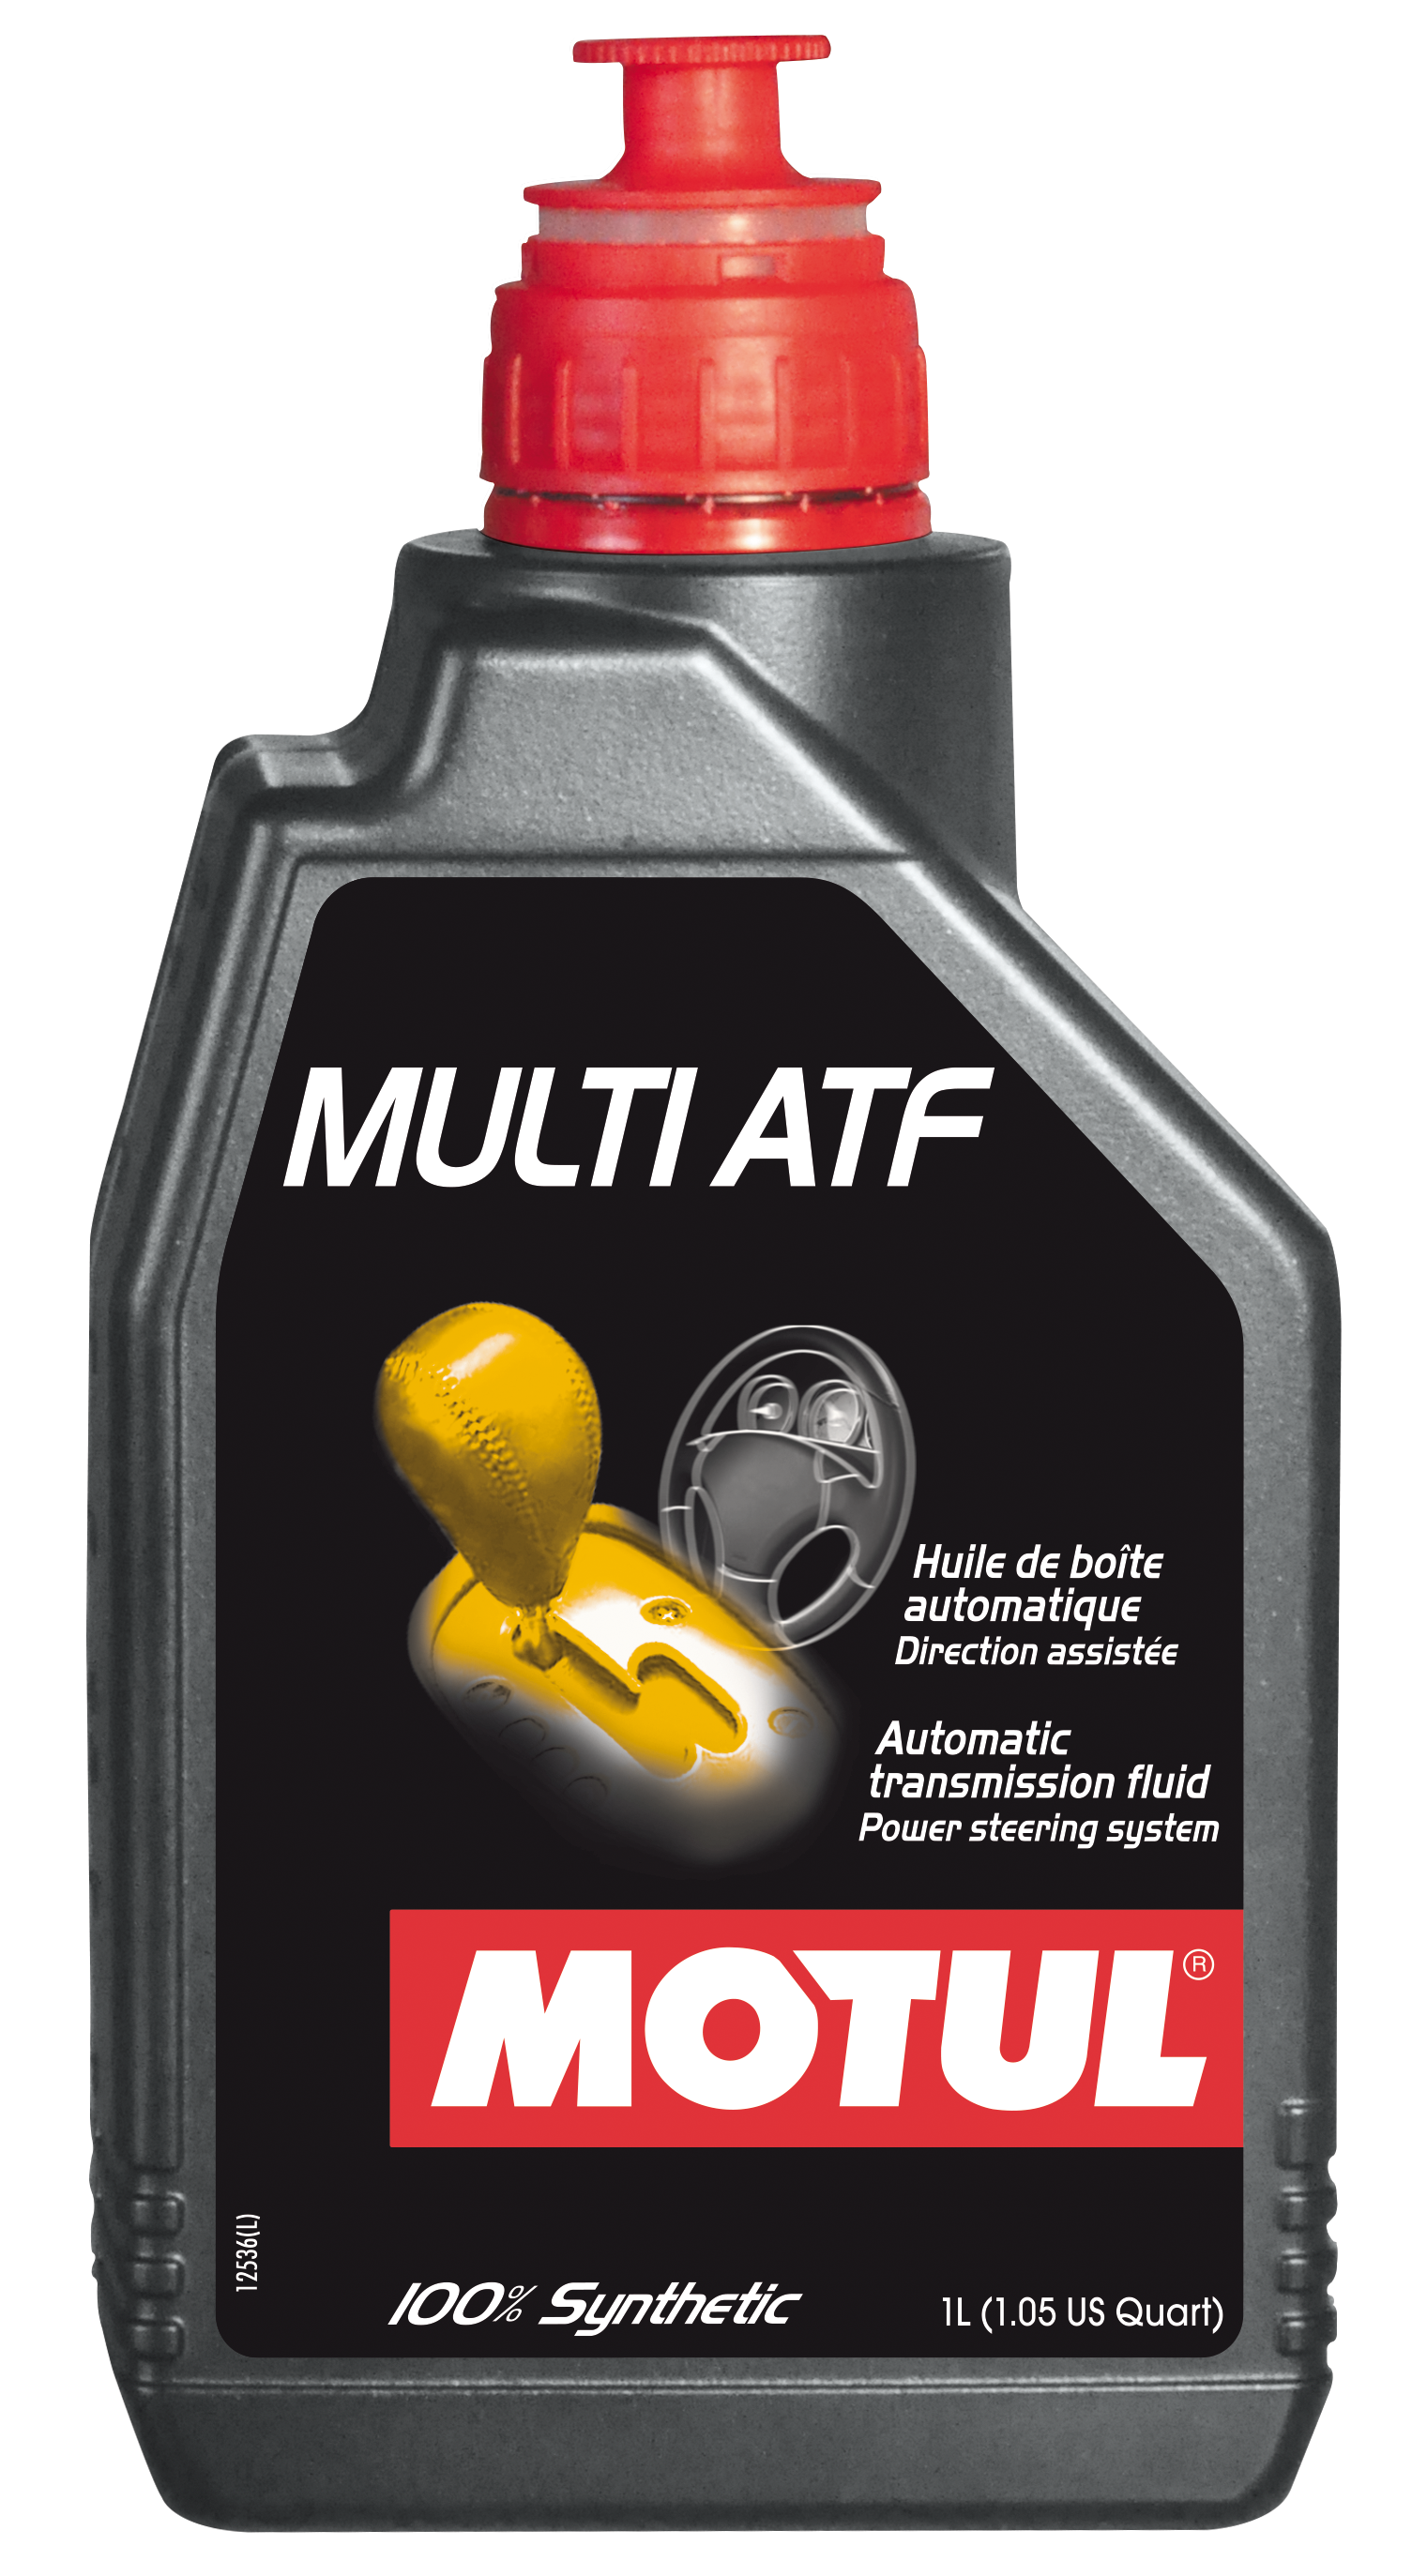 MOTUL MULTI ATF - 1L - Fully Synthetic Transmission fluid